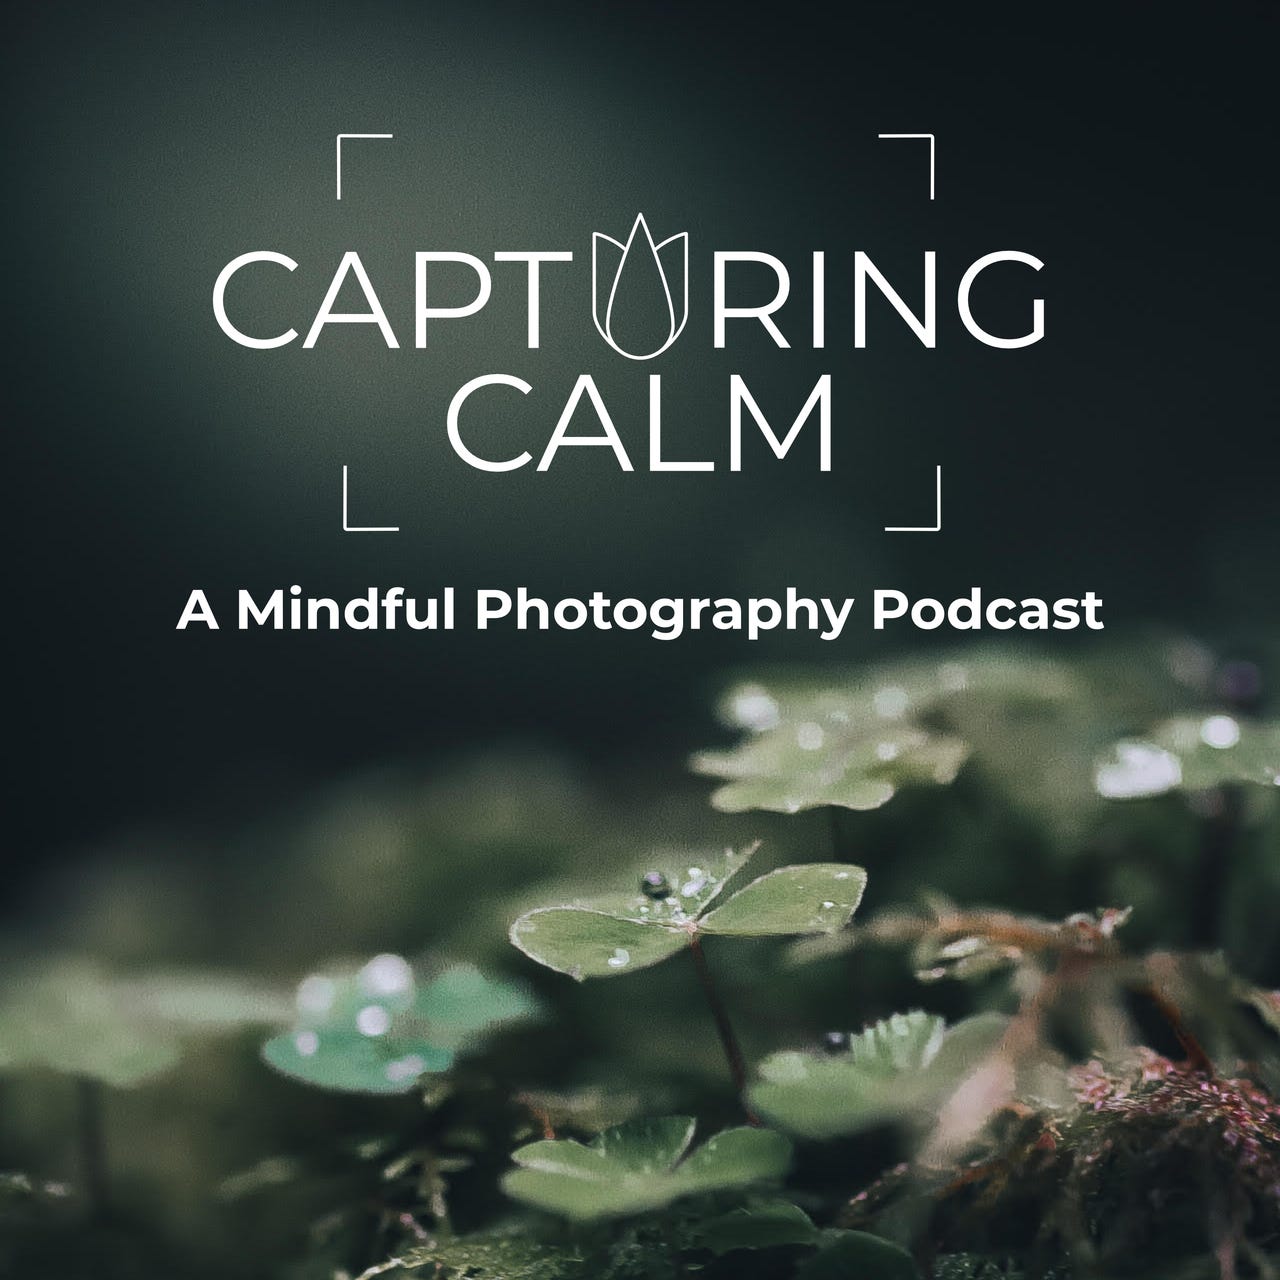 Capturing Calm